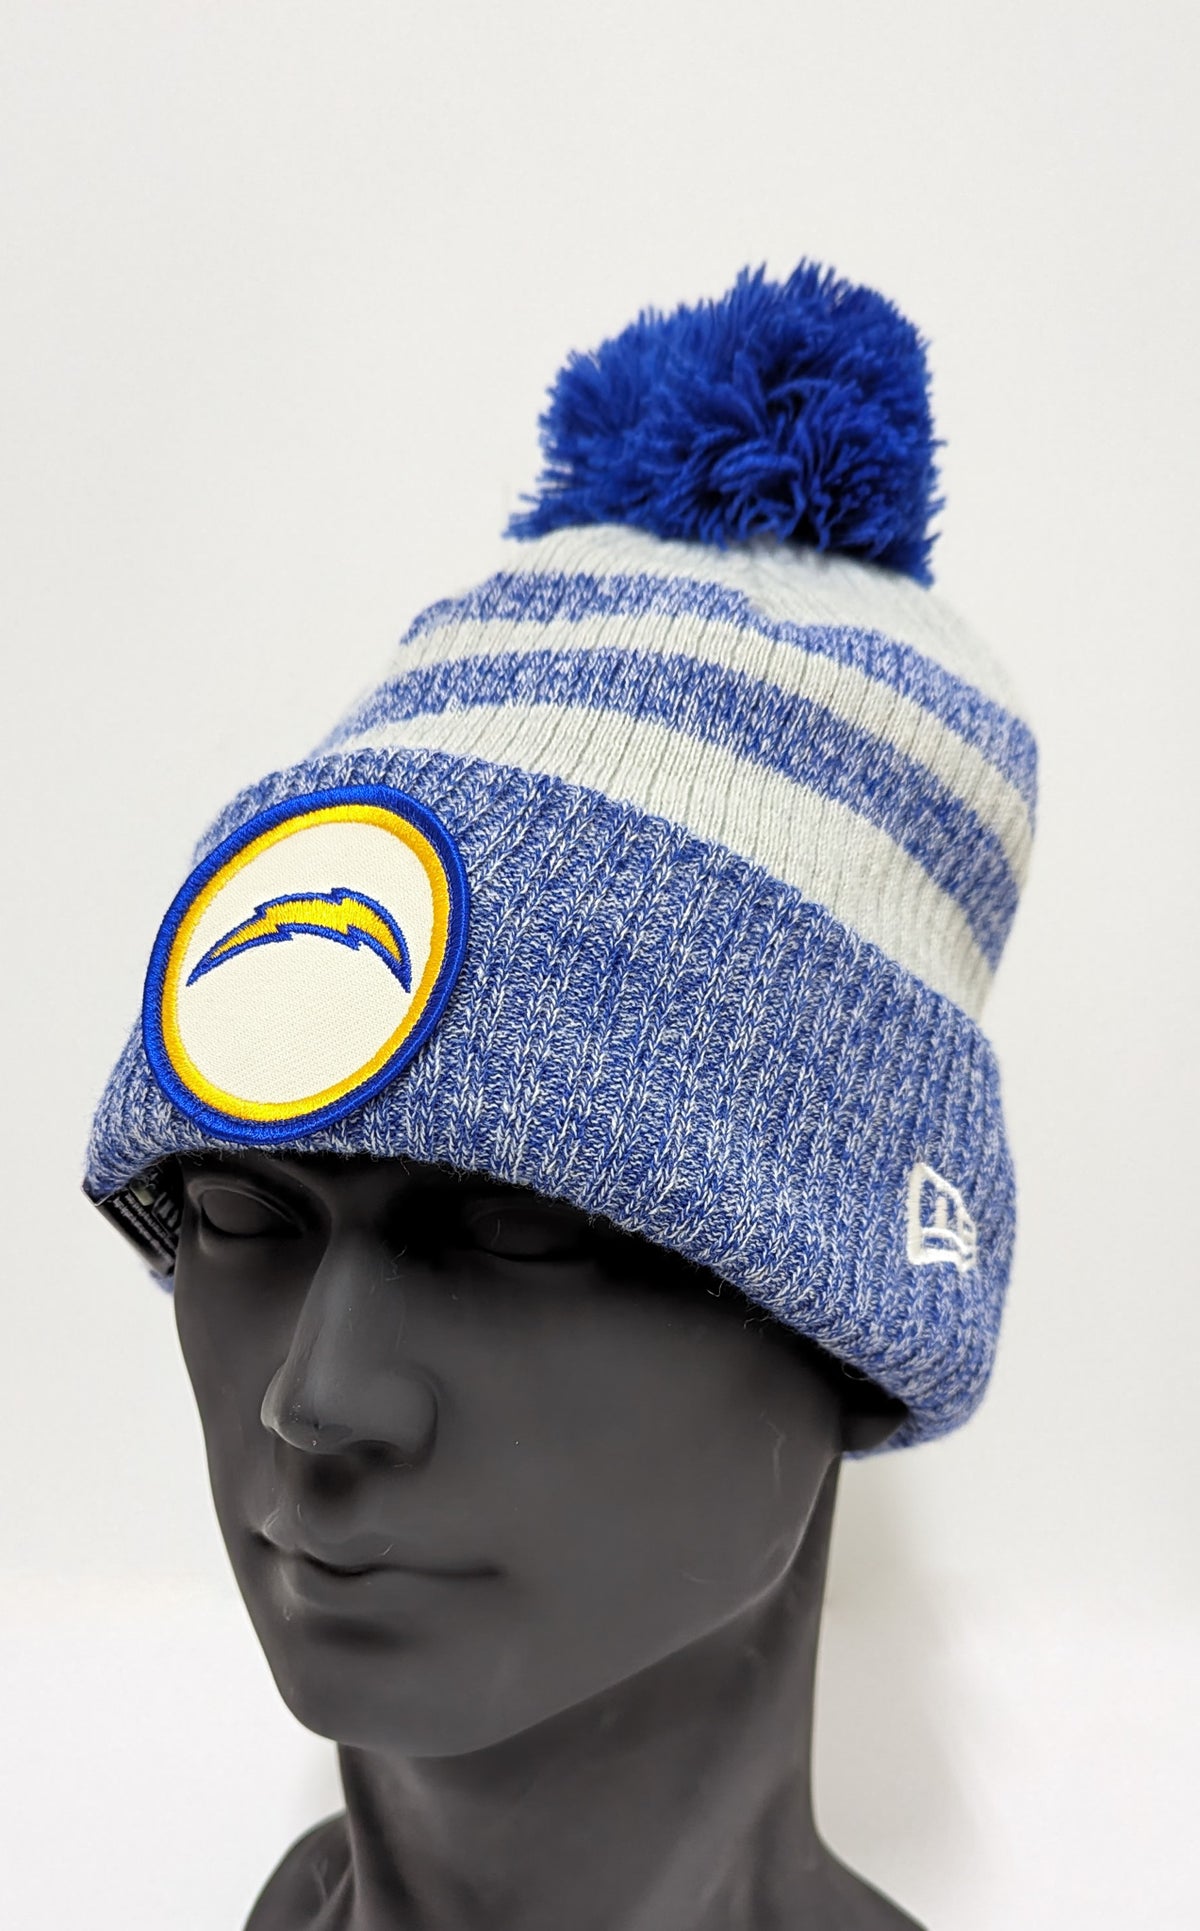 New Era NFL Los Angeles Chargers Pom Knit Beanie Blue